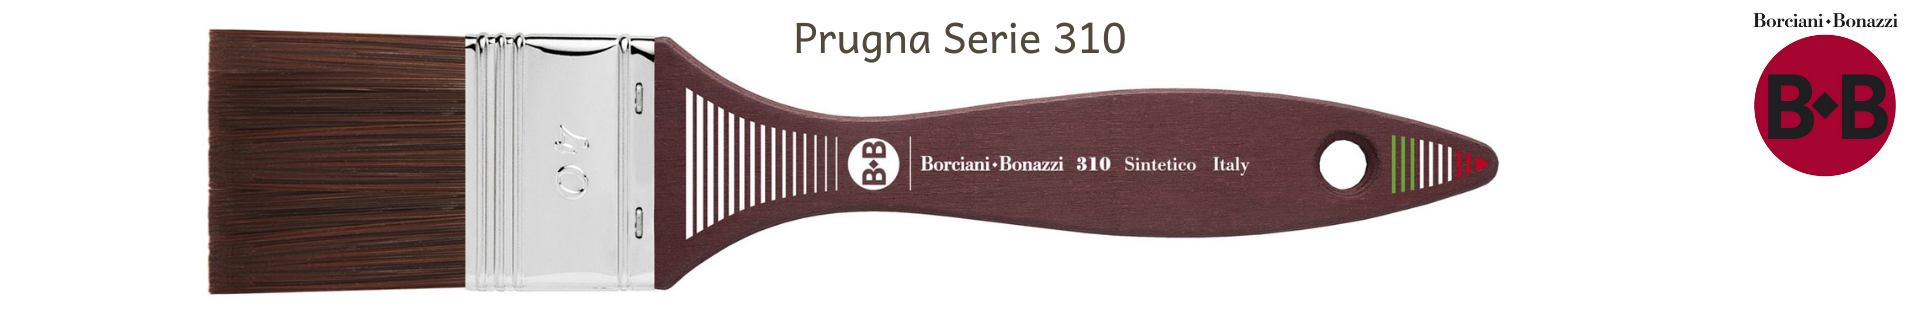 Borciani e Bonazzi Pennellessa Prugna 310